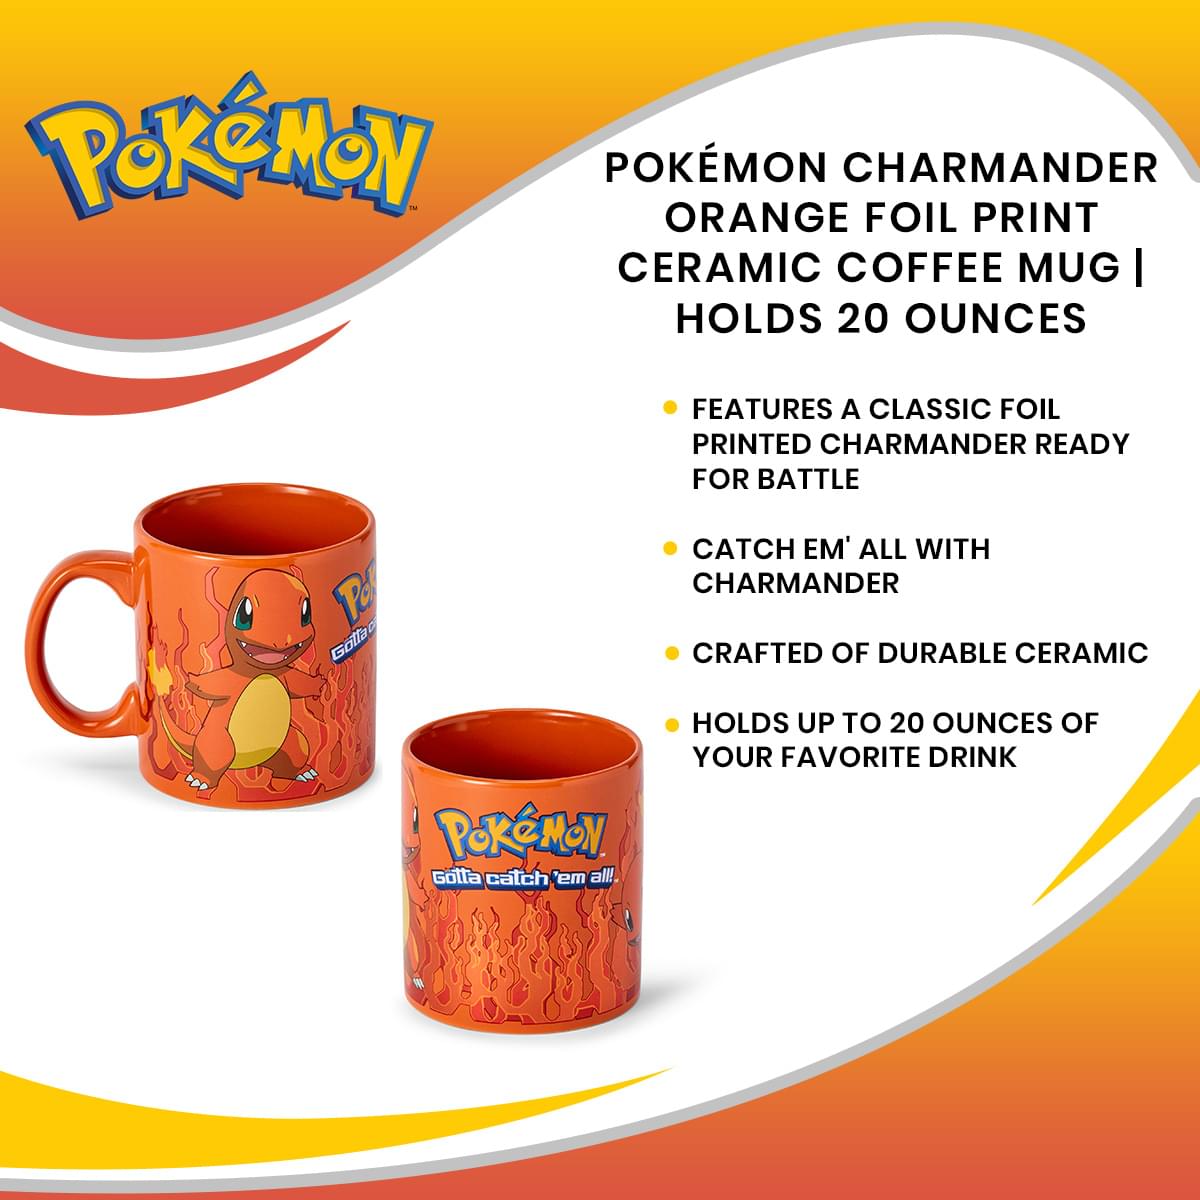 Pokémon Charmander Orange Foil Print Ceramic Coffee Mug | Holds 20 Ounces